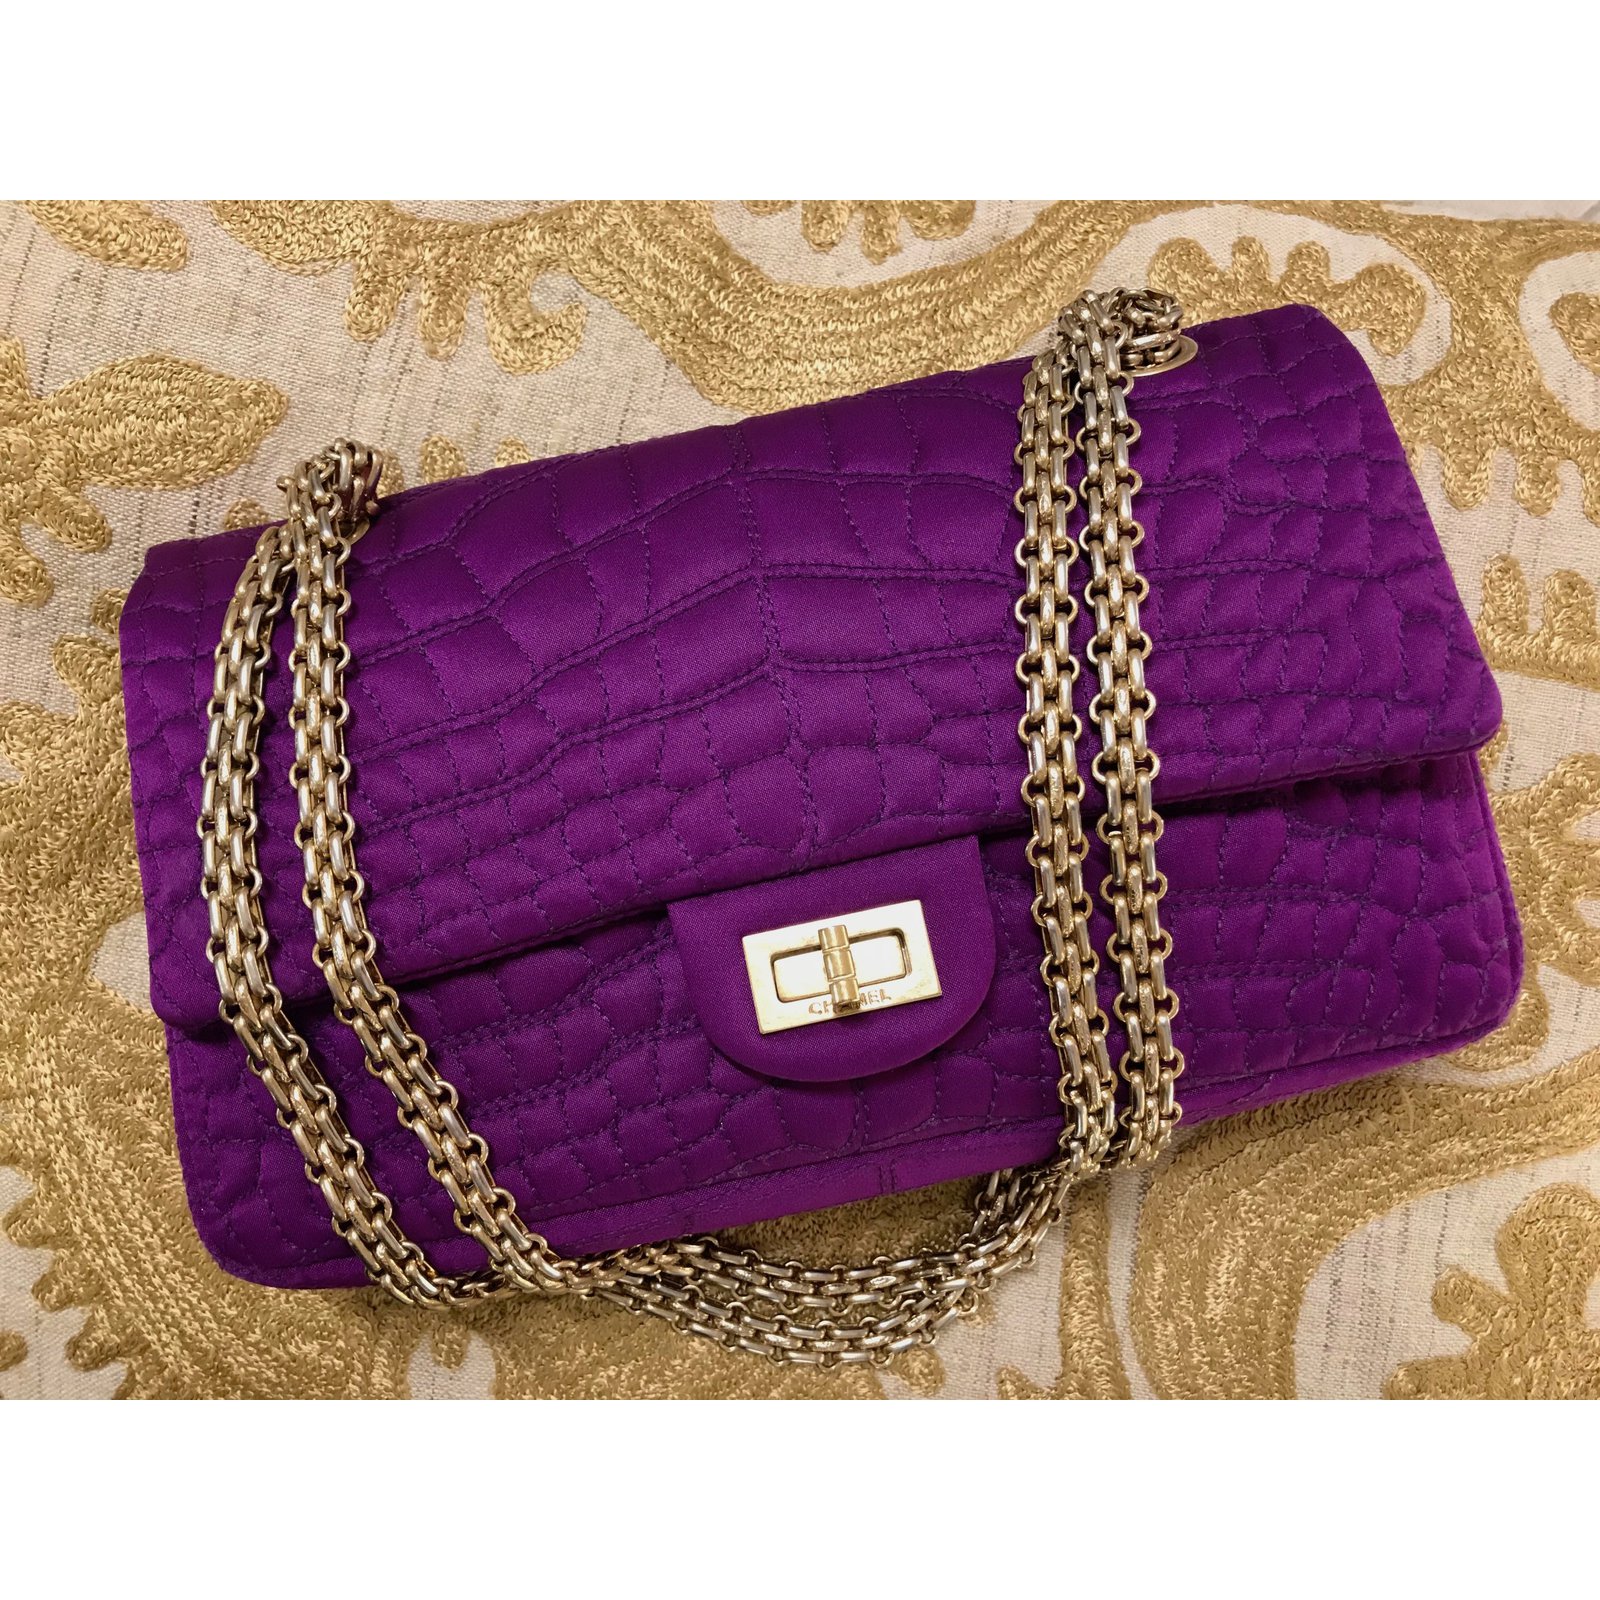 CHANEL Medium size 2-55 Double flap bag in purple silk satin